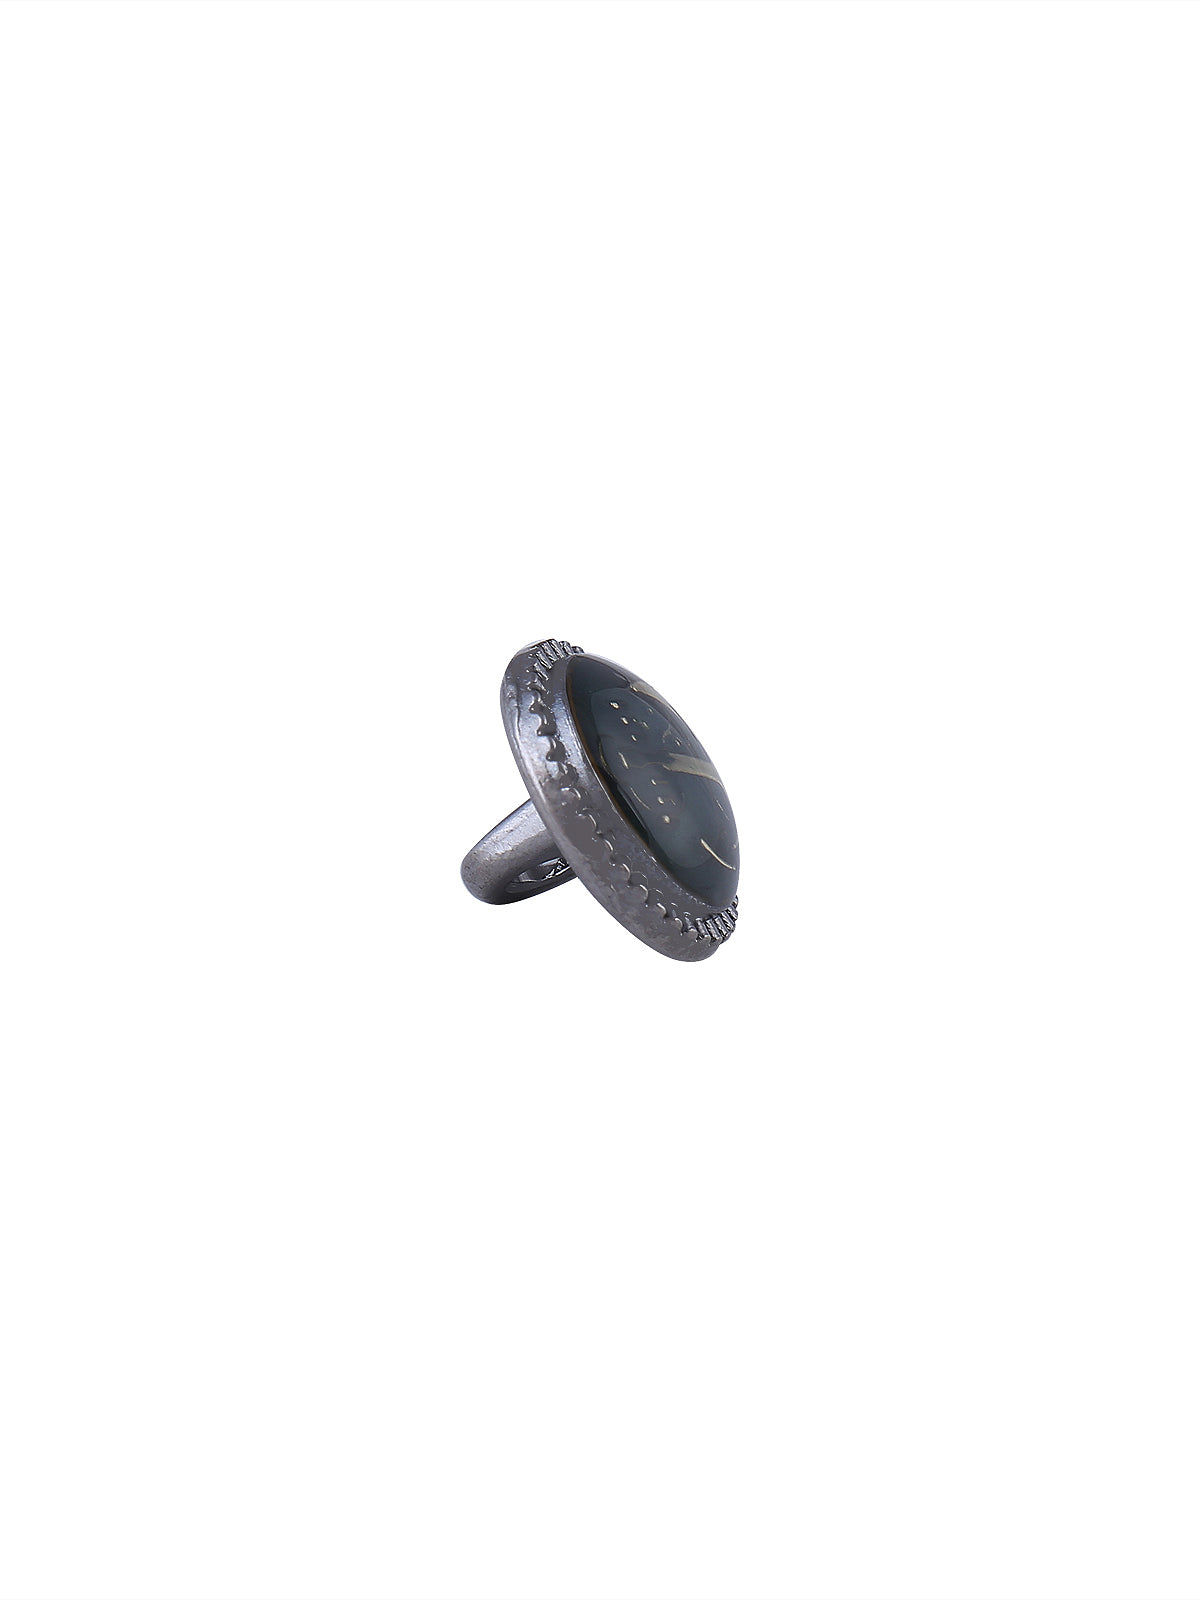 Classy Round Shape Lamination Lucite Downhole Metal Button